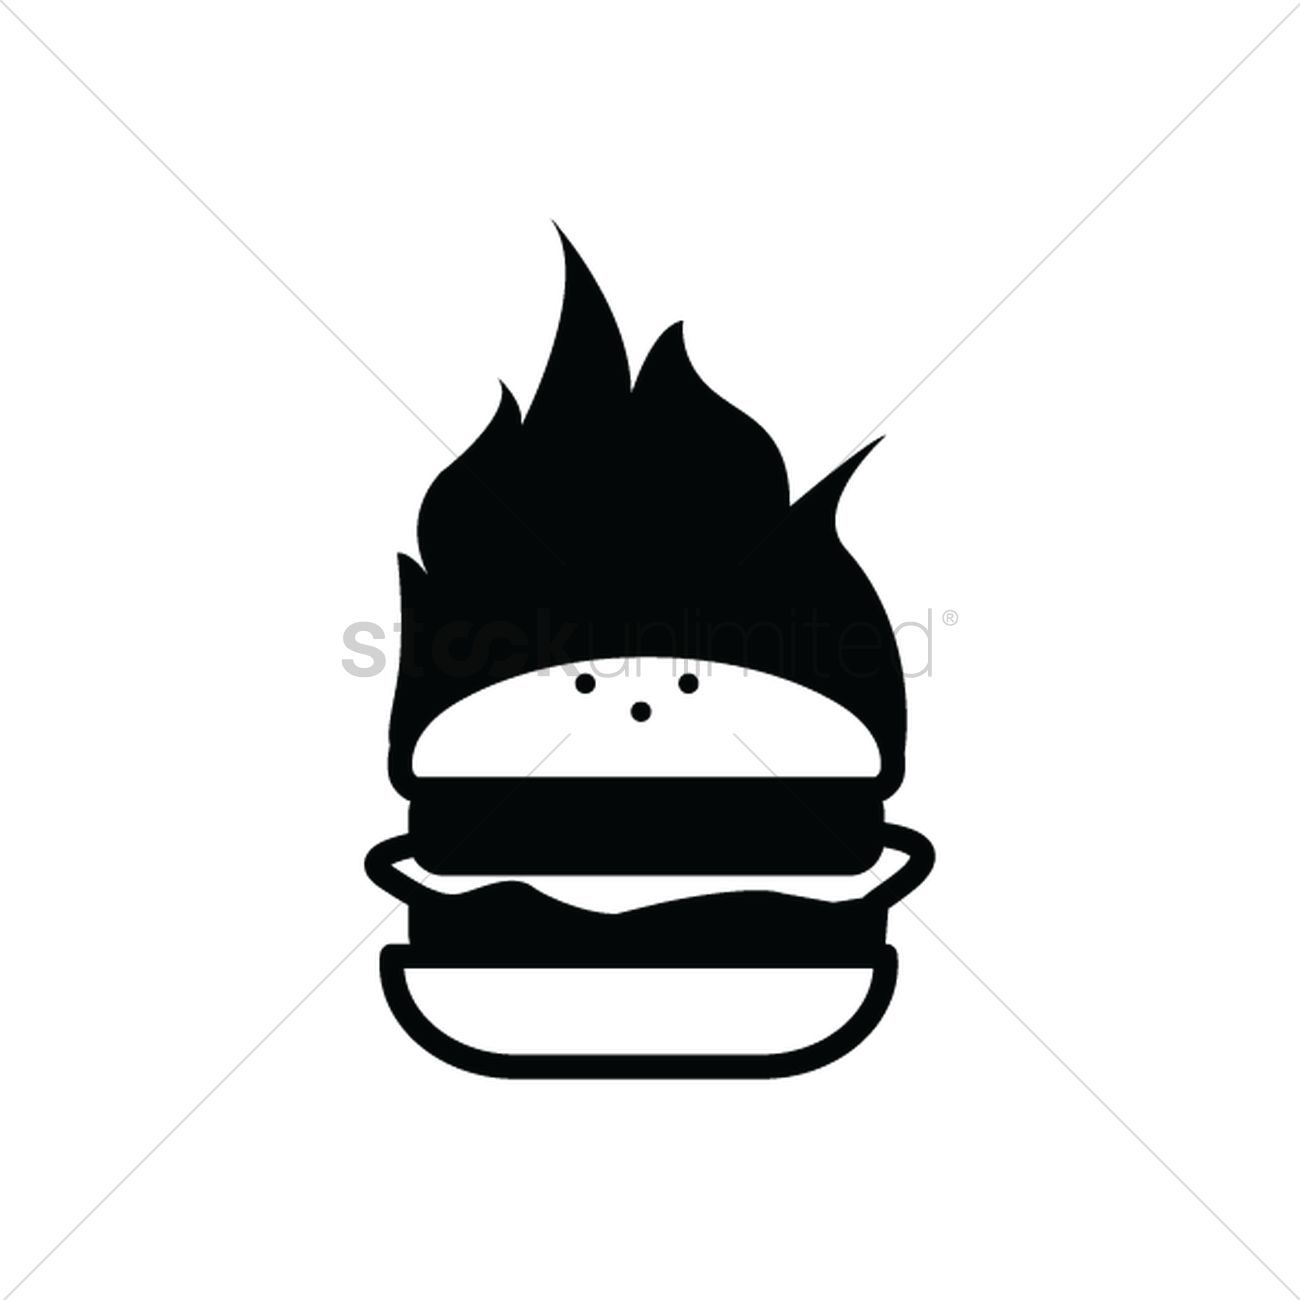 Burger fire silhouette.